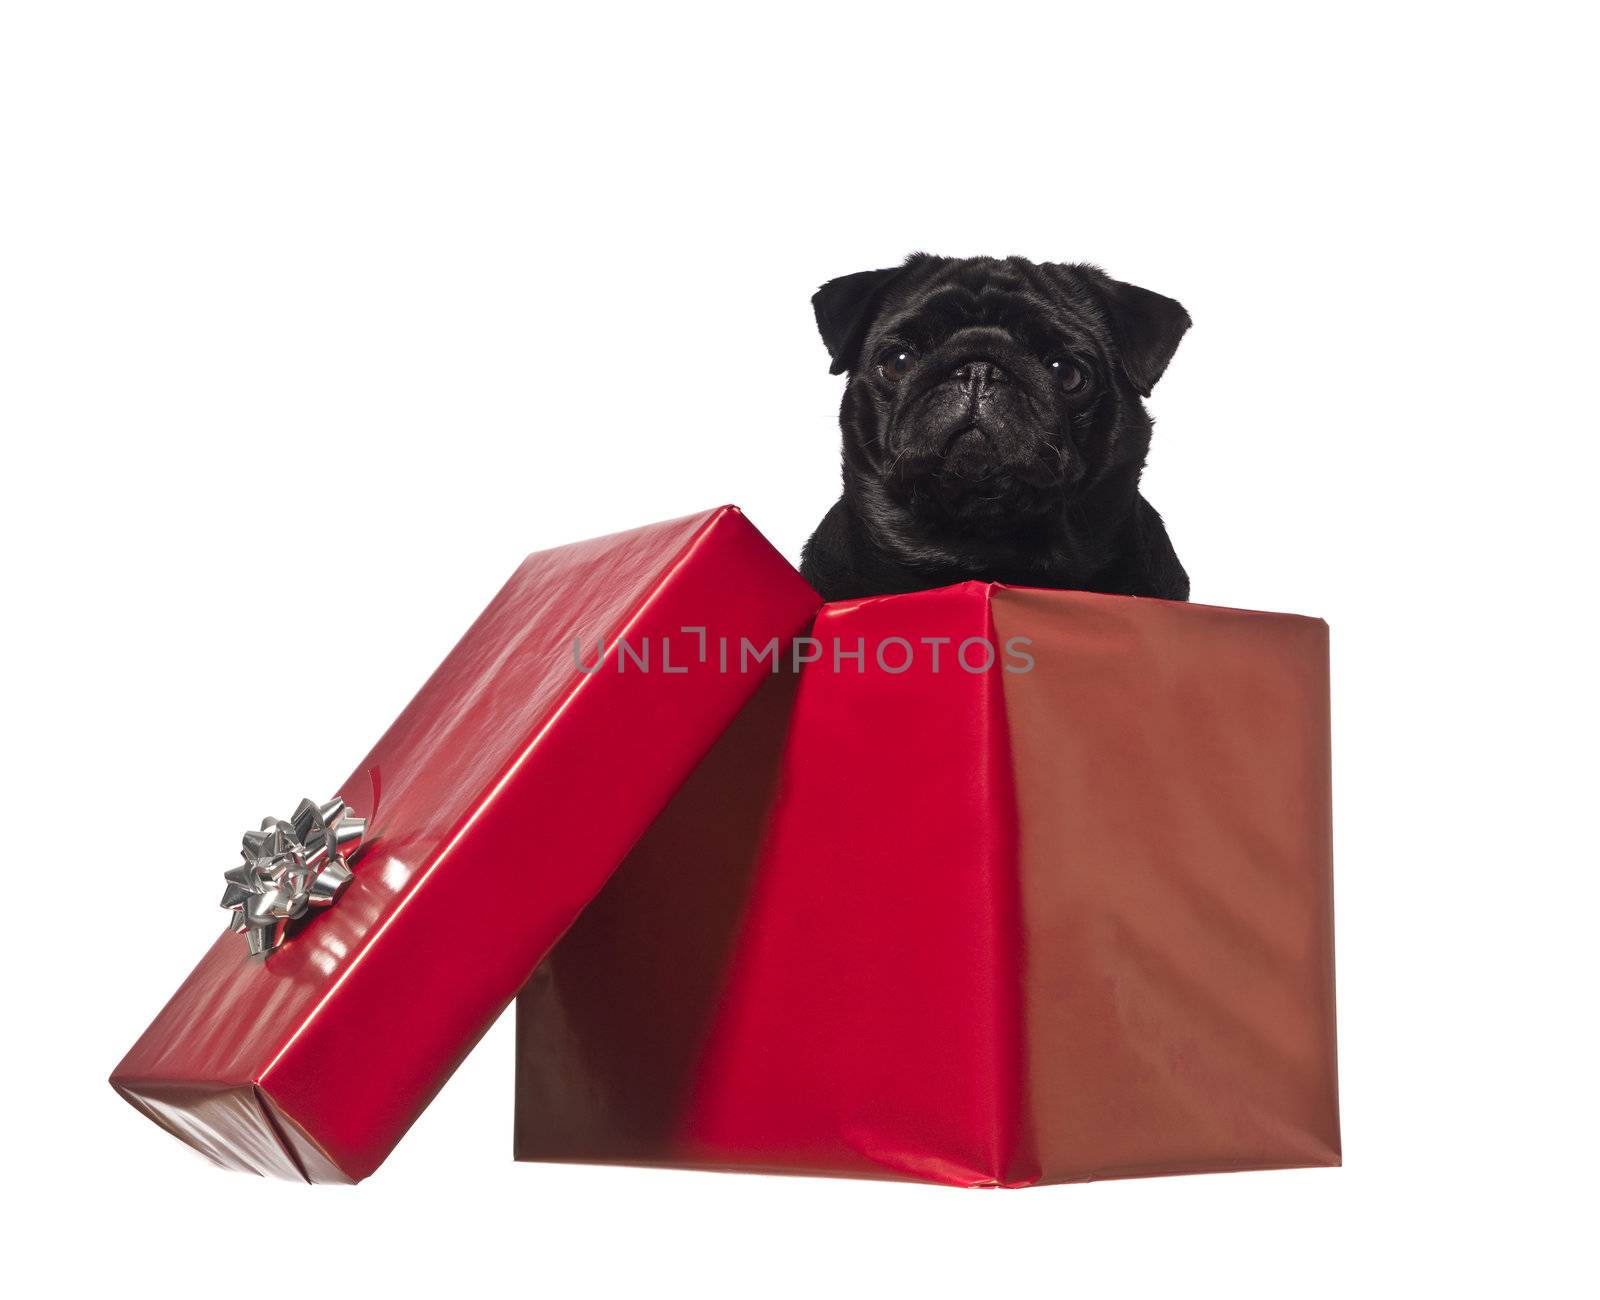 Dog in a gift box by gemenacom